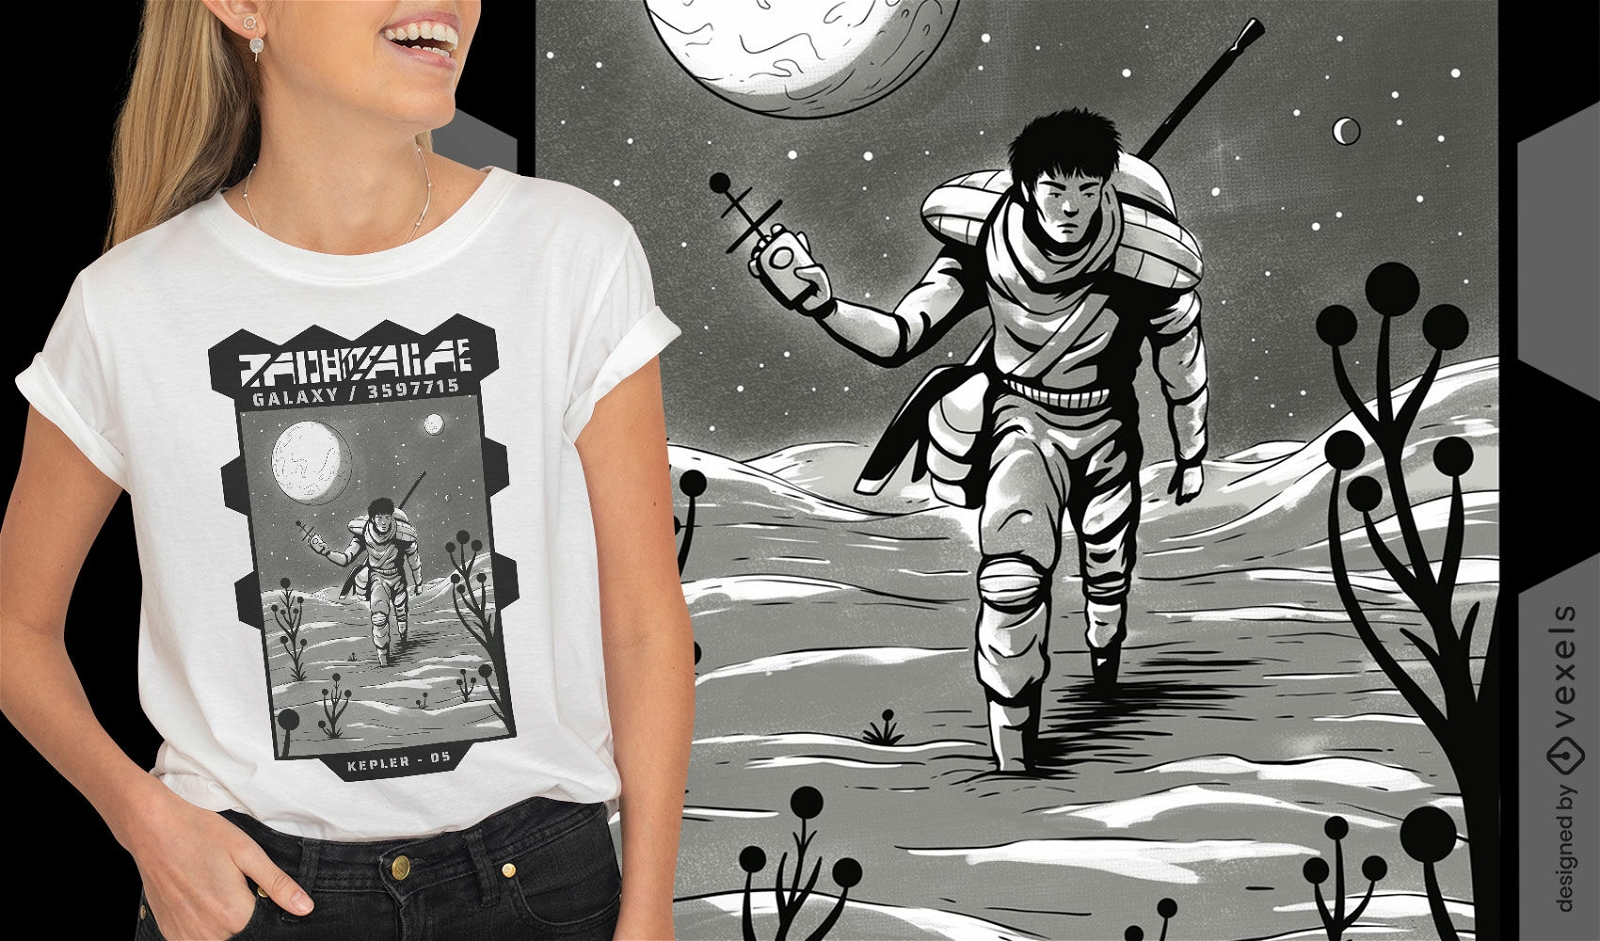 Astronaut adventure t-shirt design